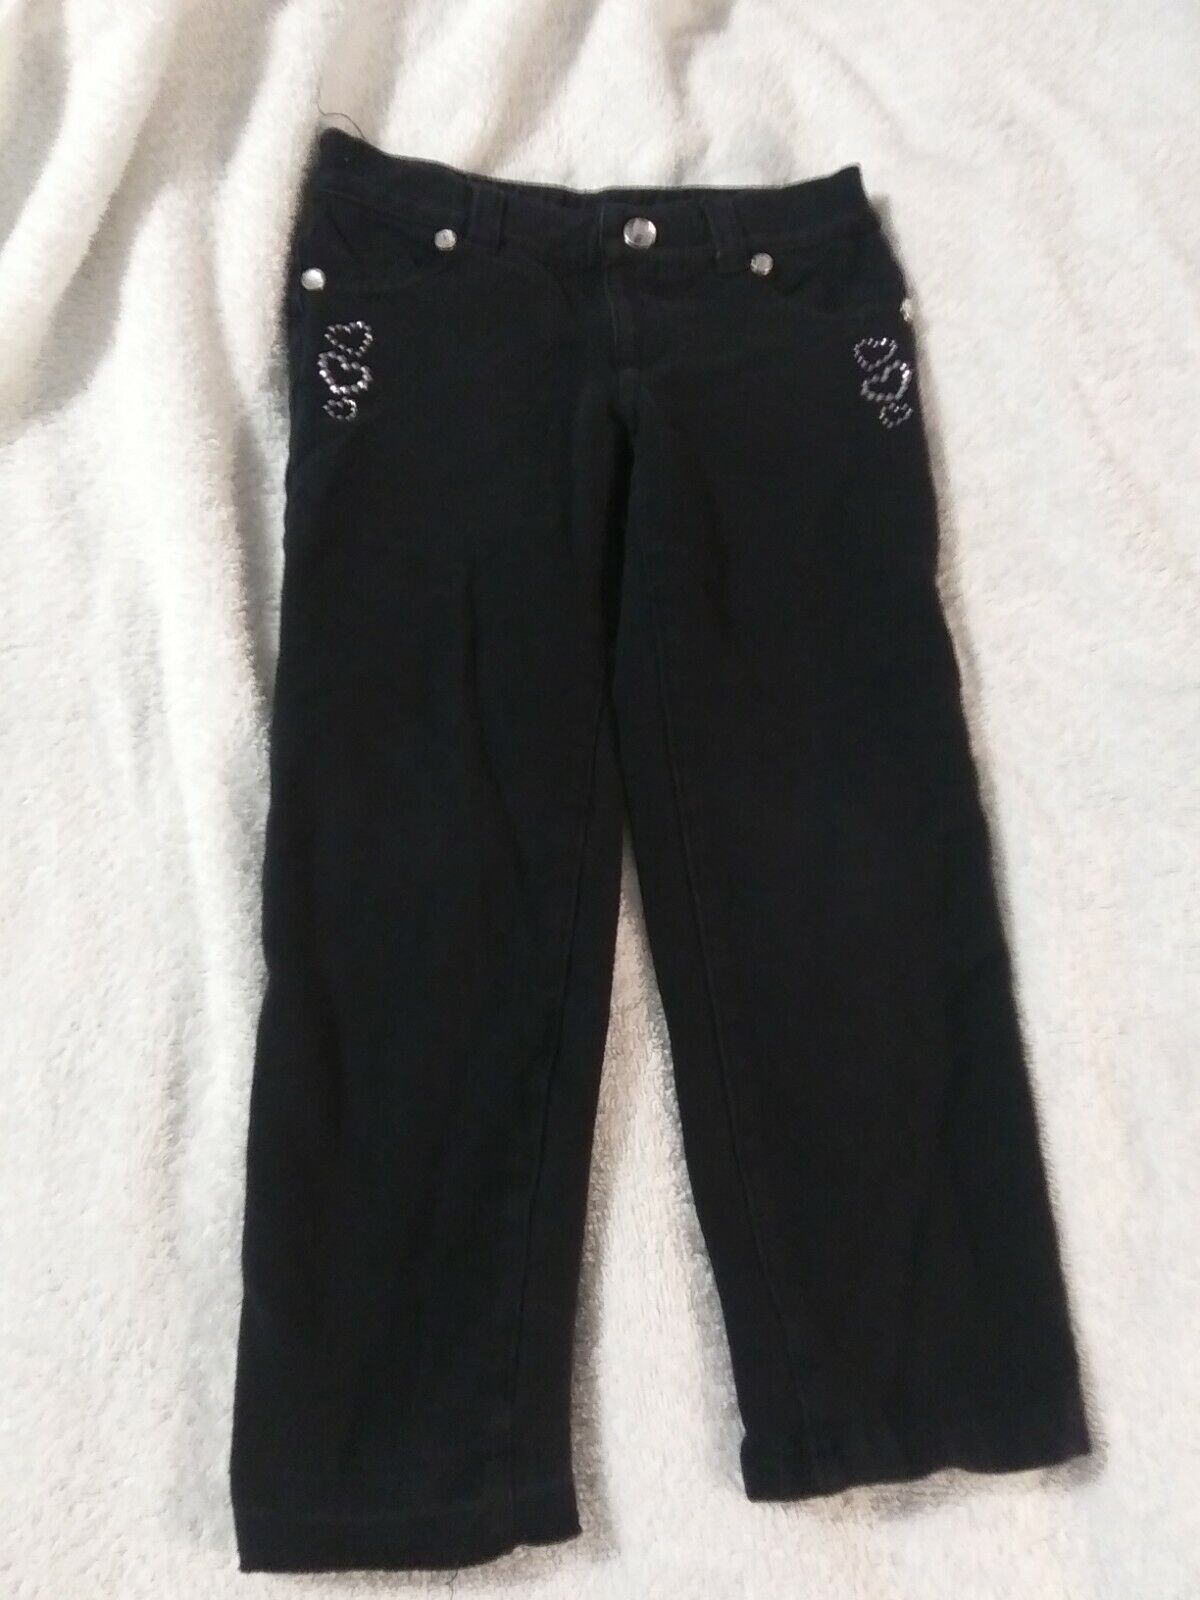 Girls Size 4/4T Greendog Black Bejeweled Pants